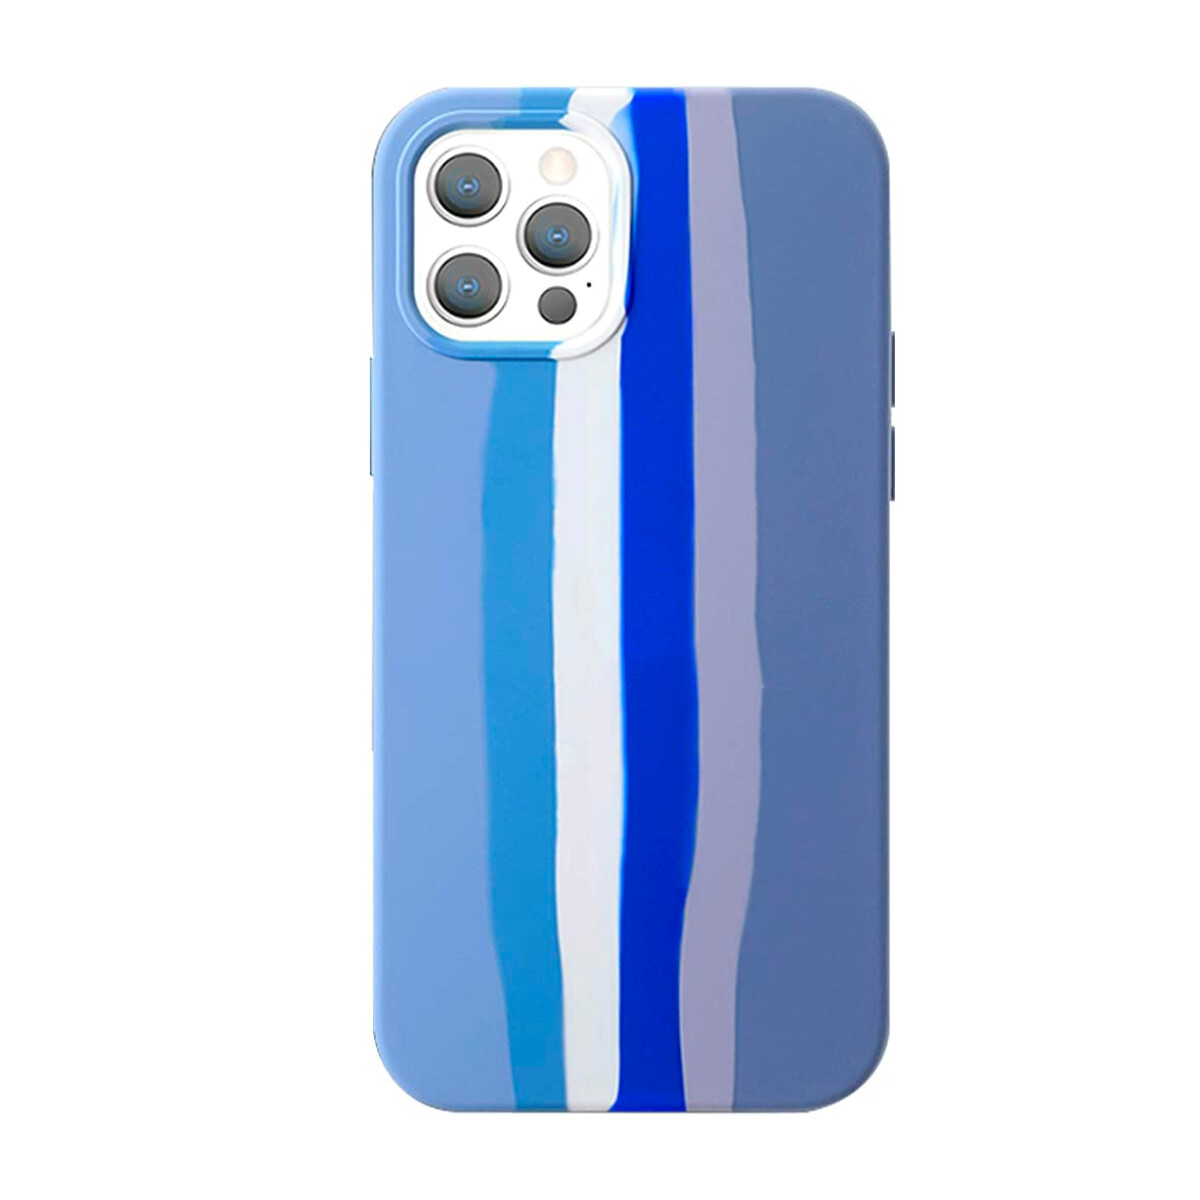 Silicone case iphone xs Arcoiris azul